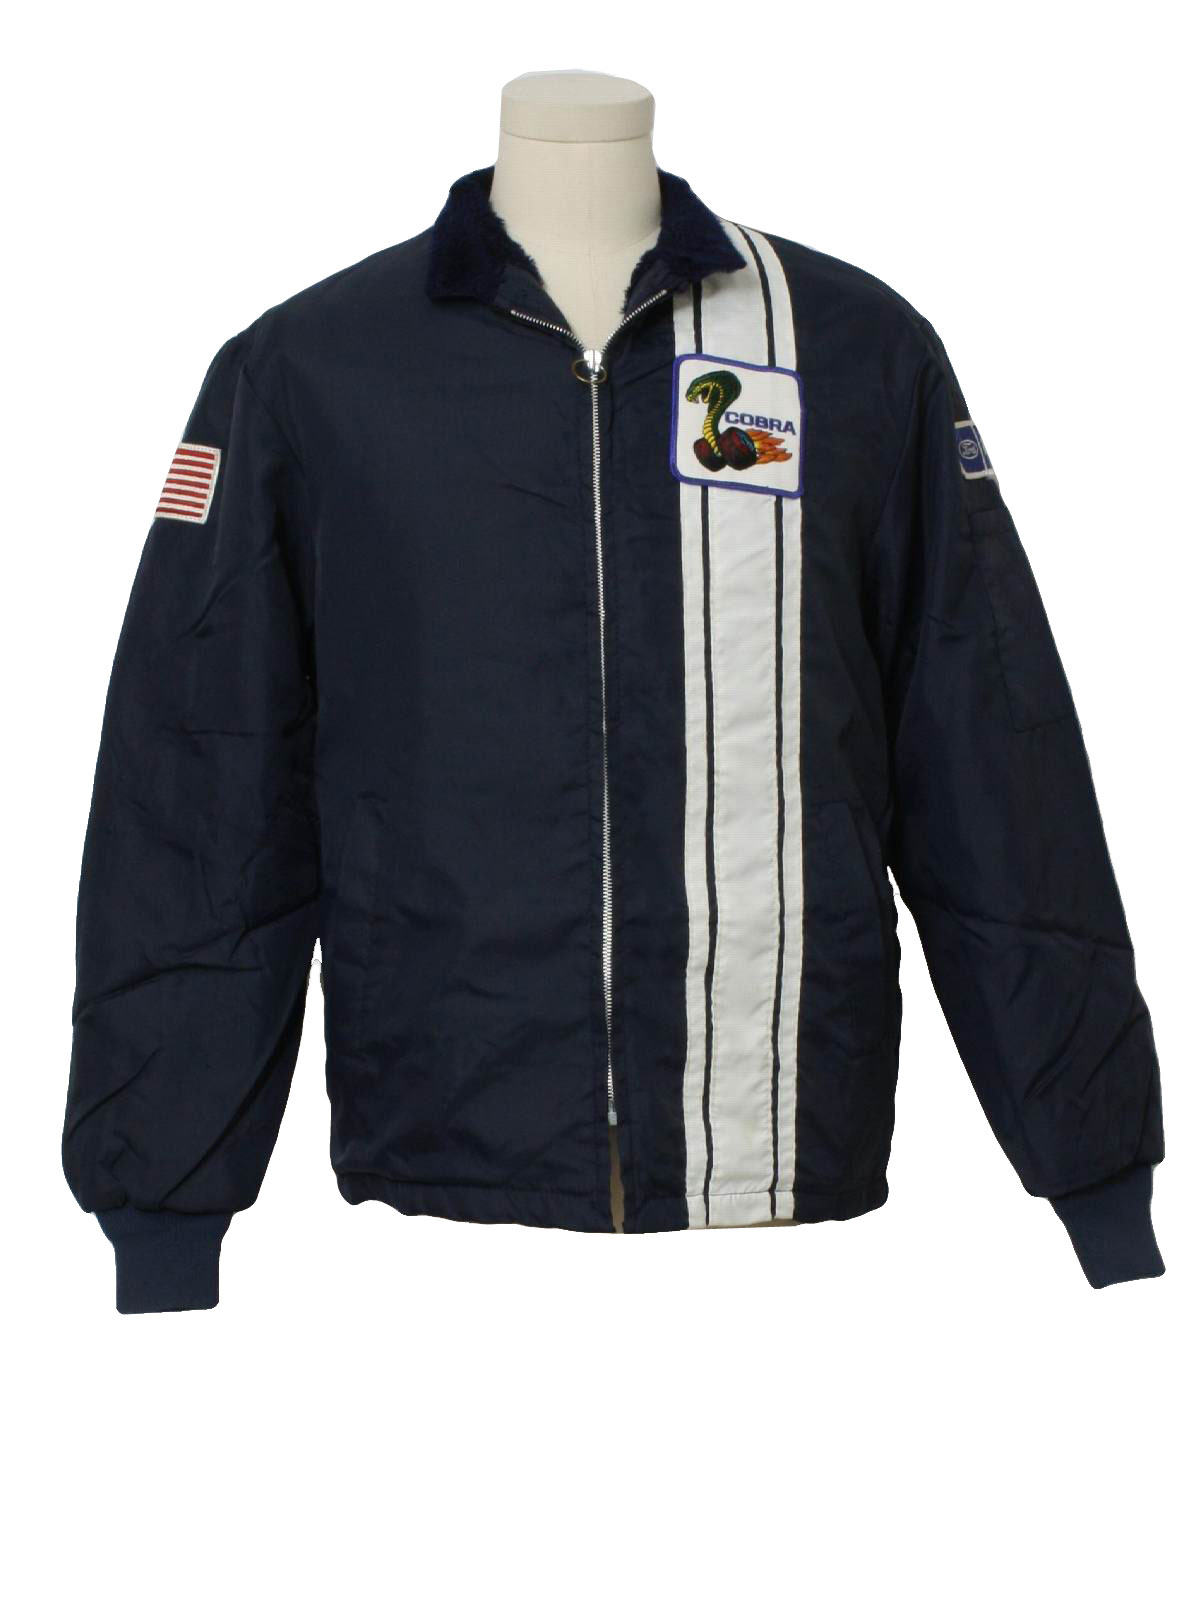 Ford cobra racing jacket #9